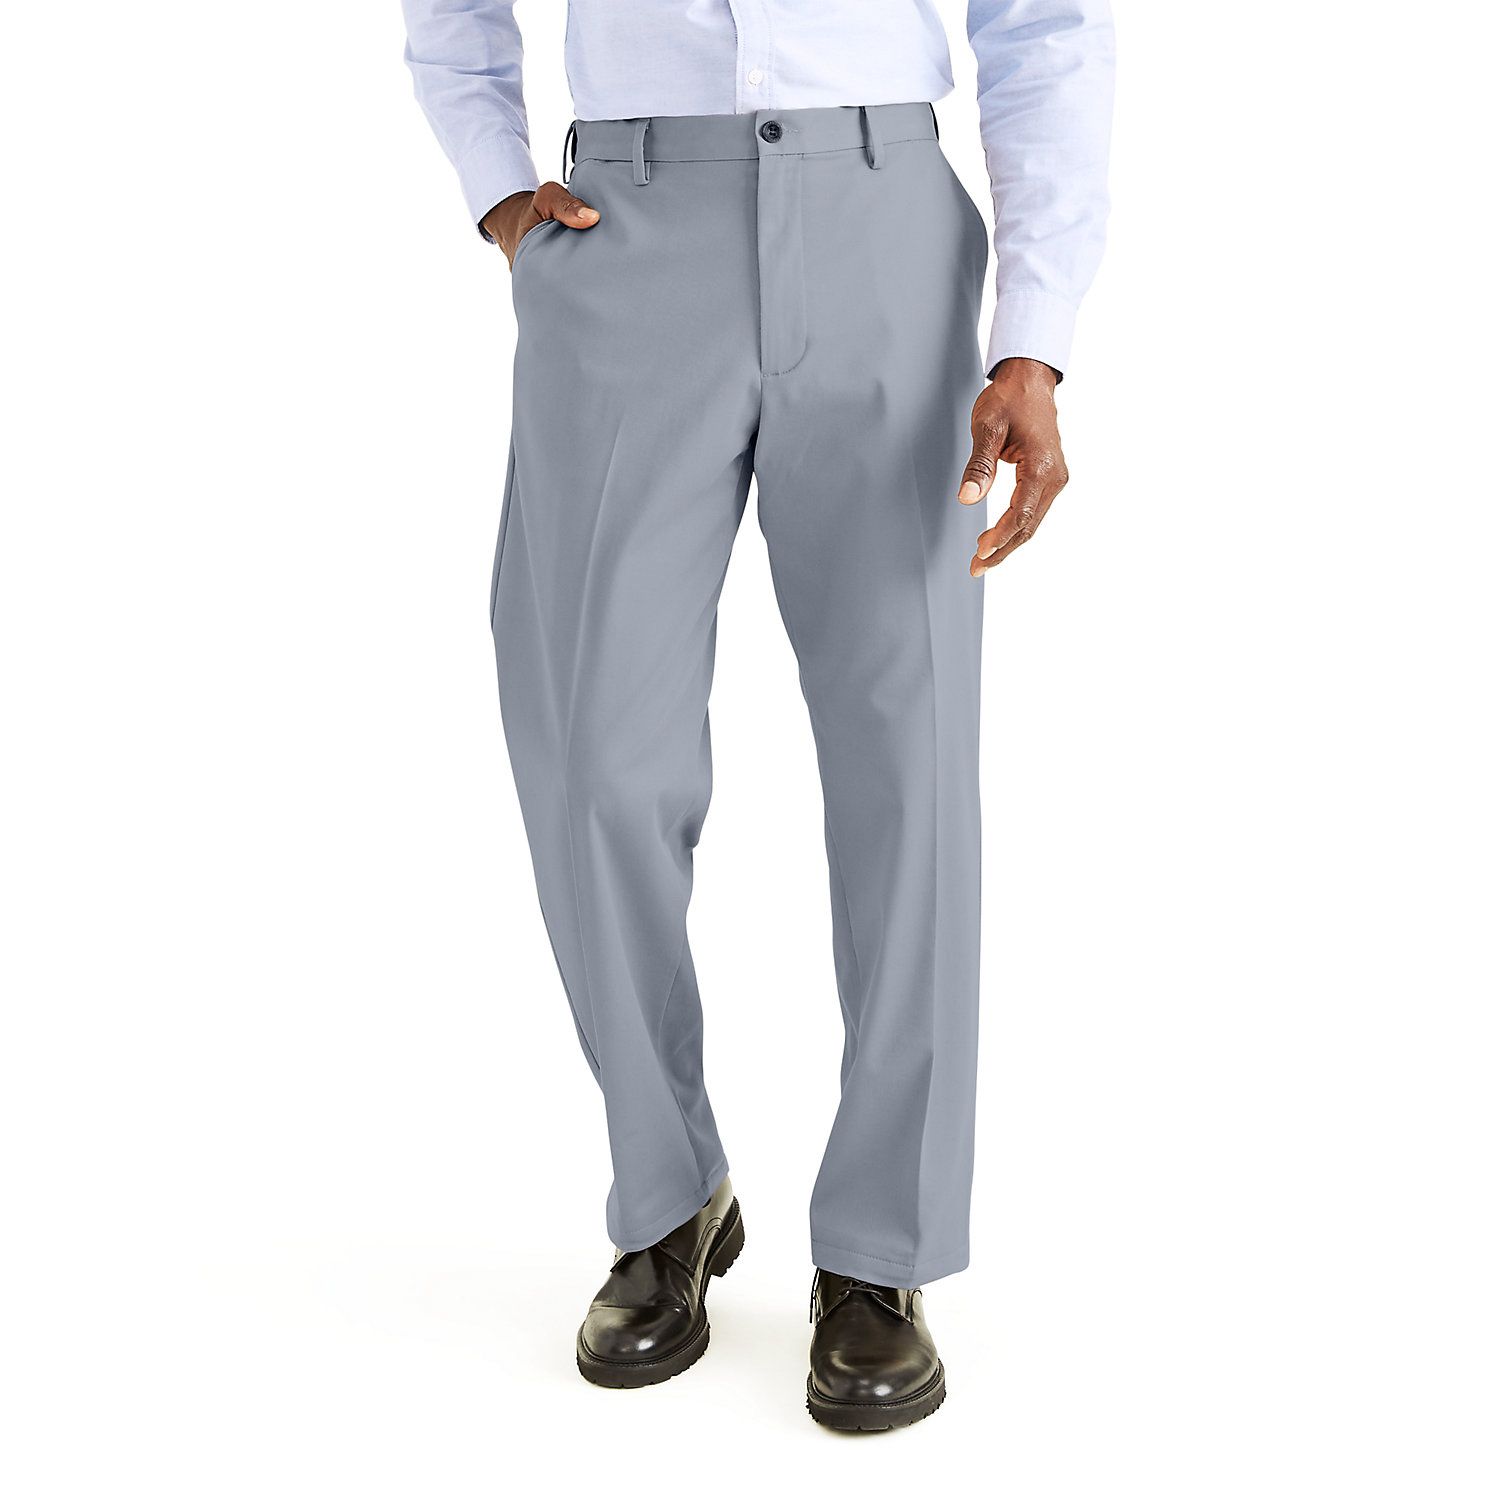 mens grey khaki pants